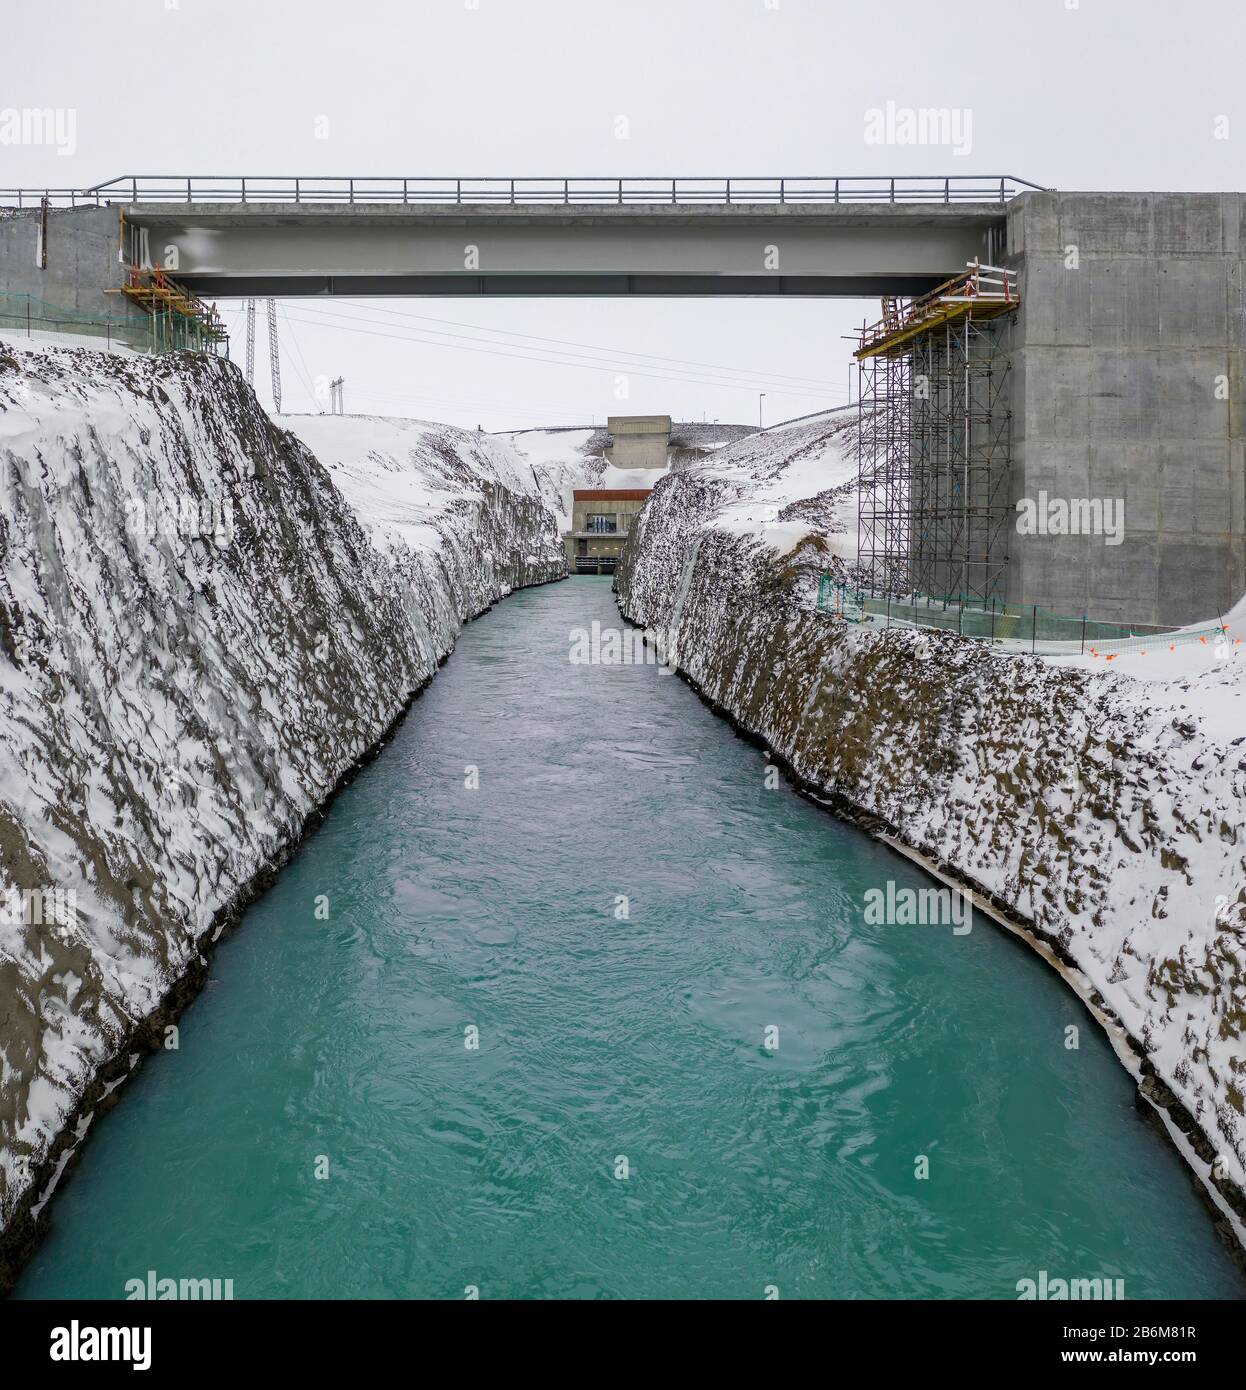 Sultartangavirkjun hydro power plant, Central Highlands, Iceland Stock Photo